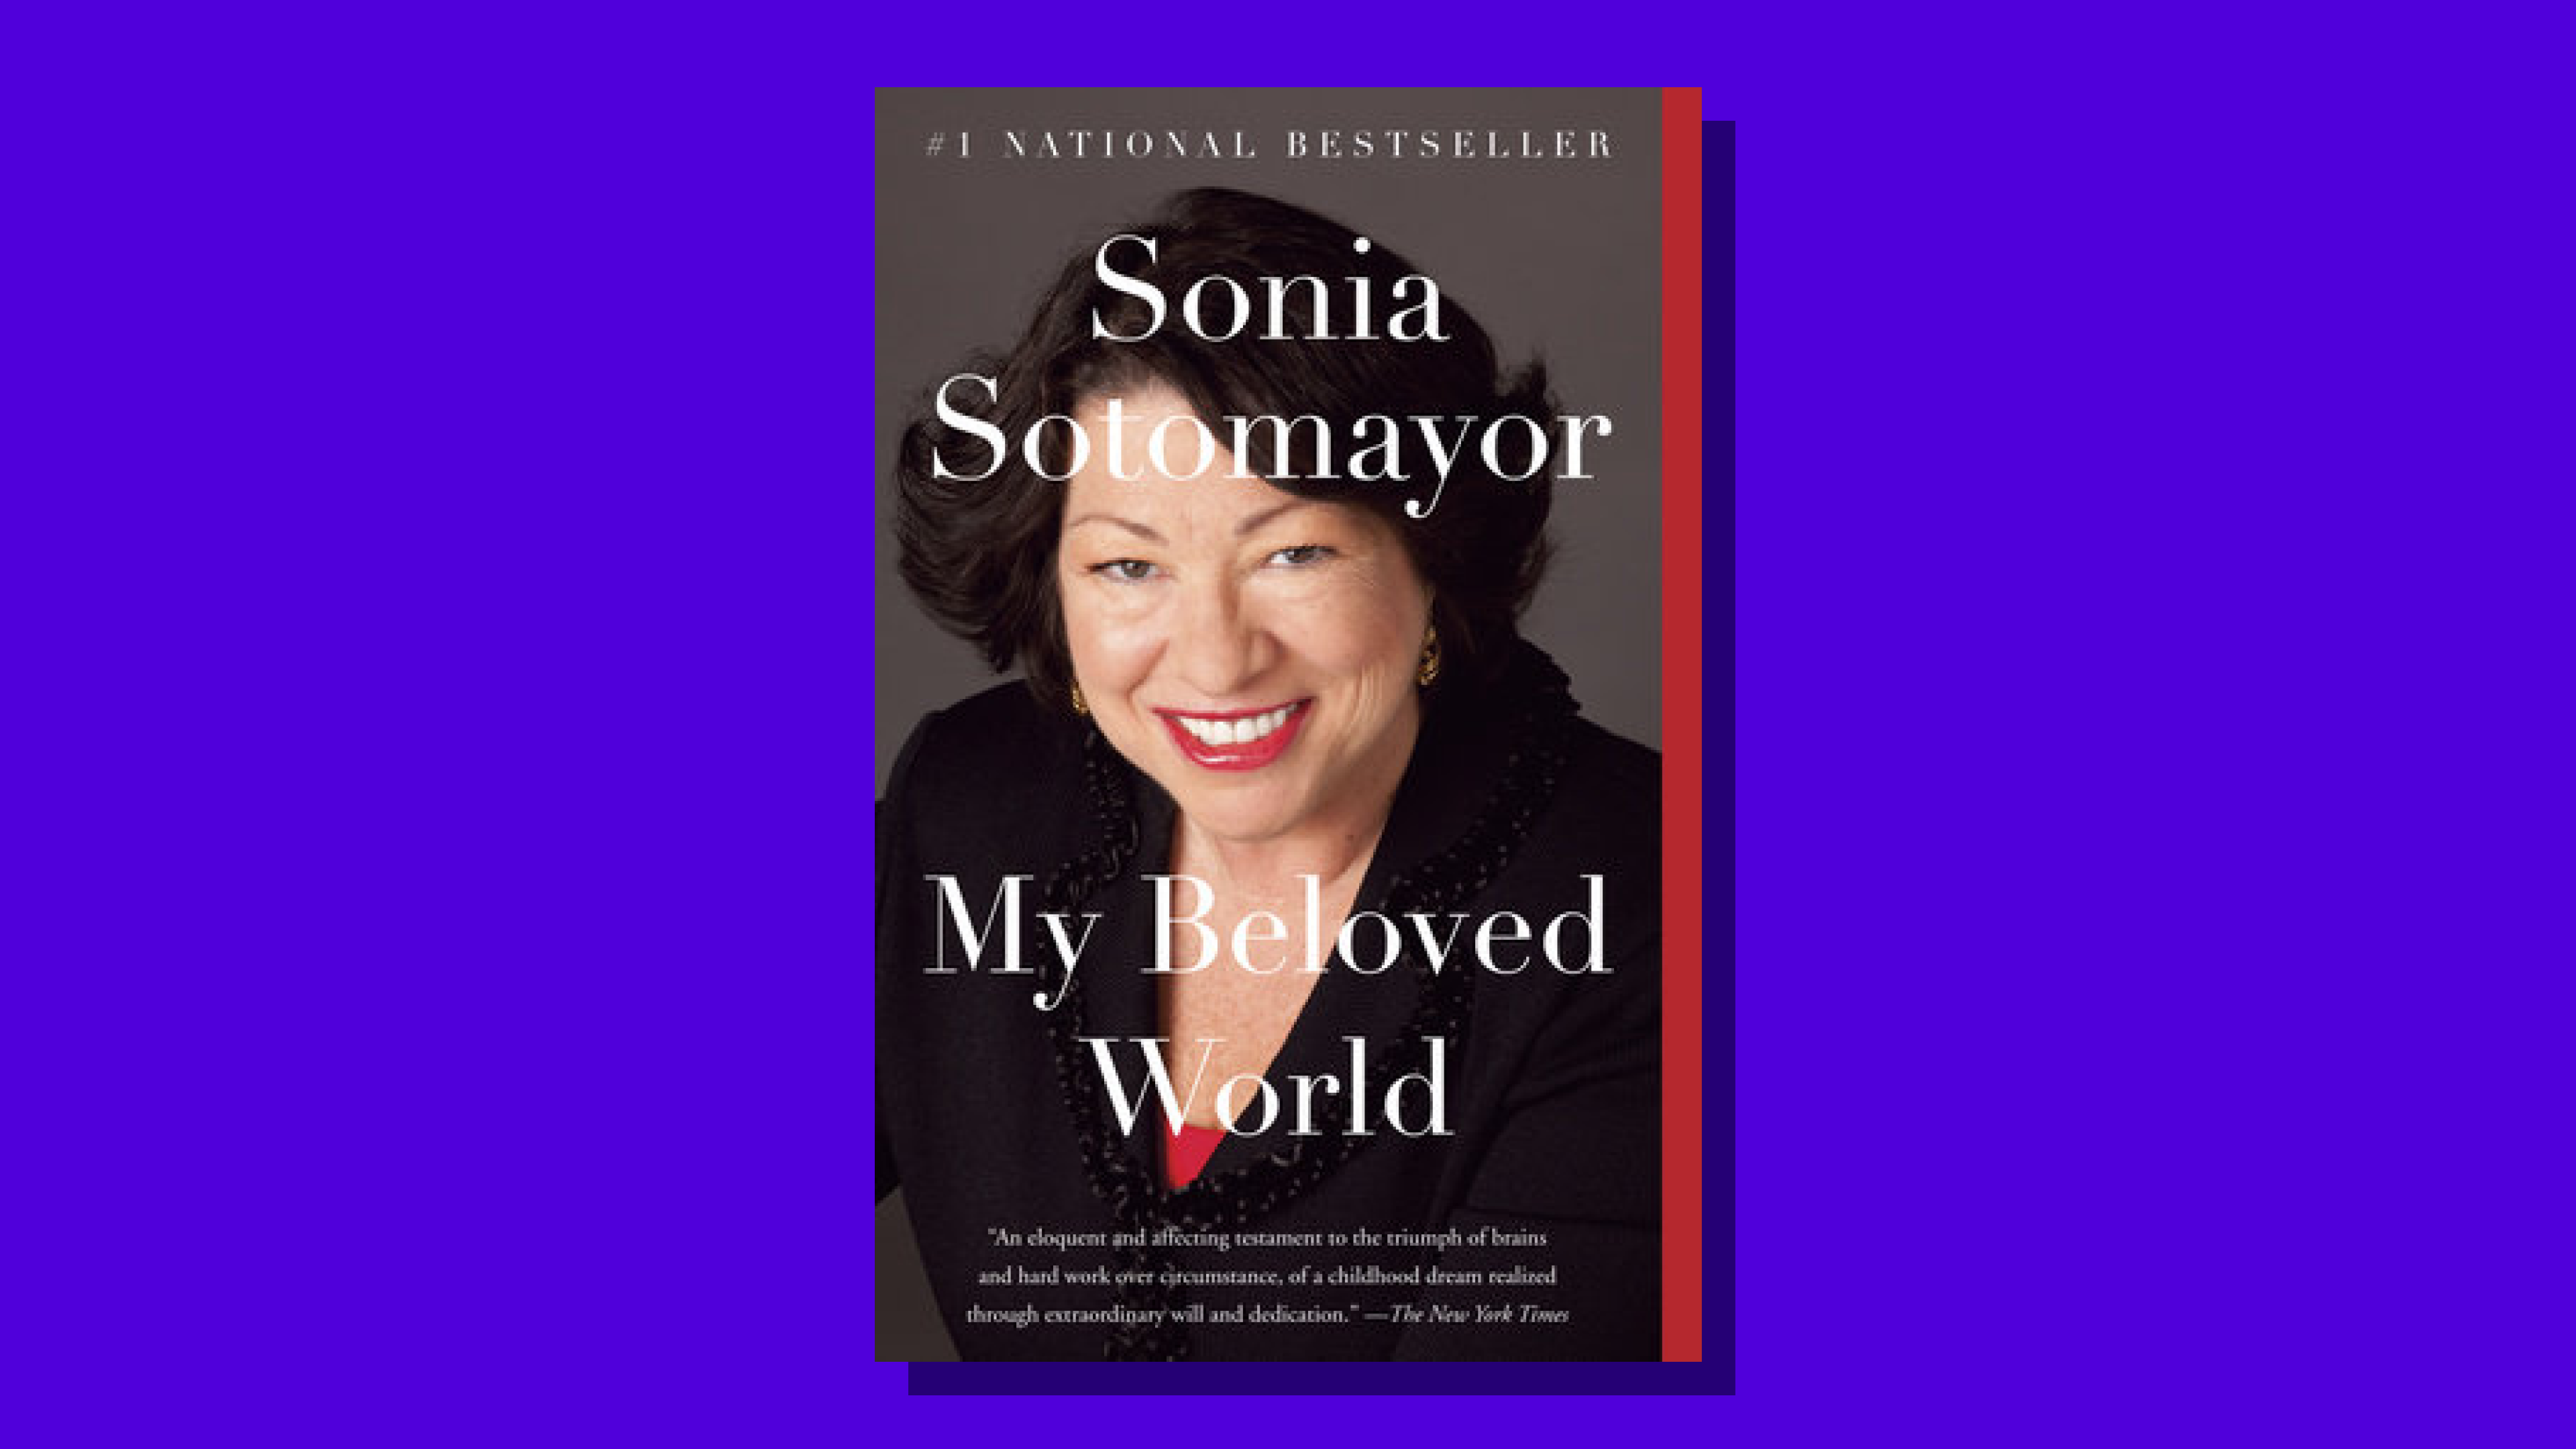 “My Beloved World” by Sonia Sotomayor